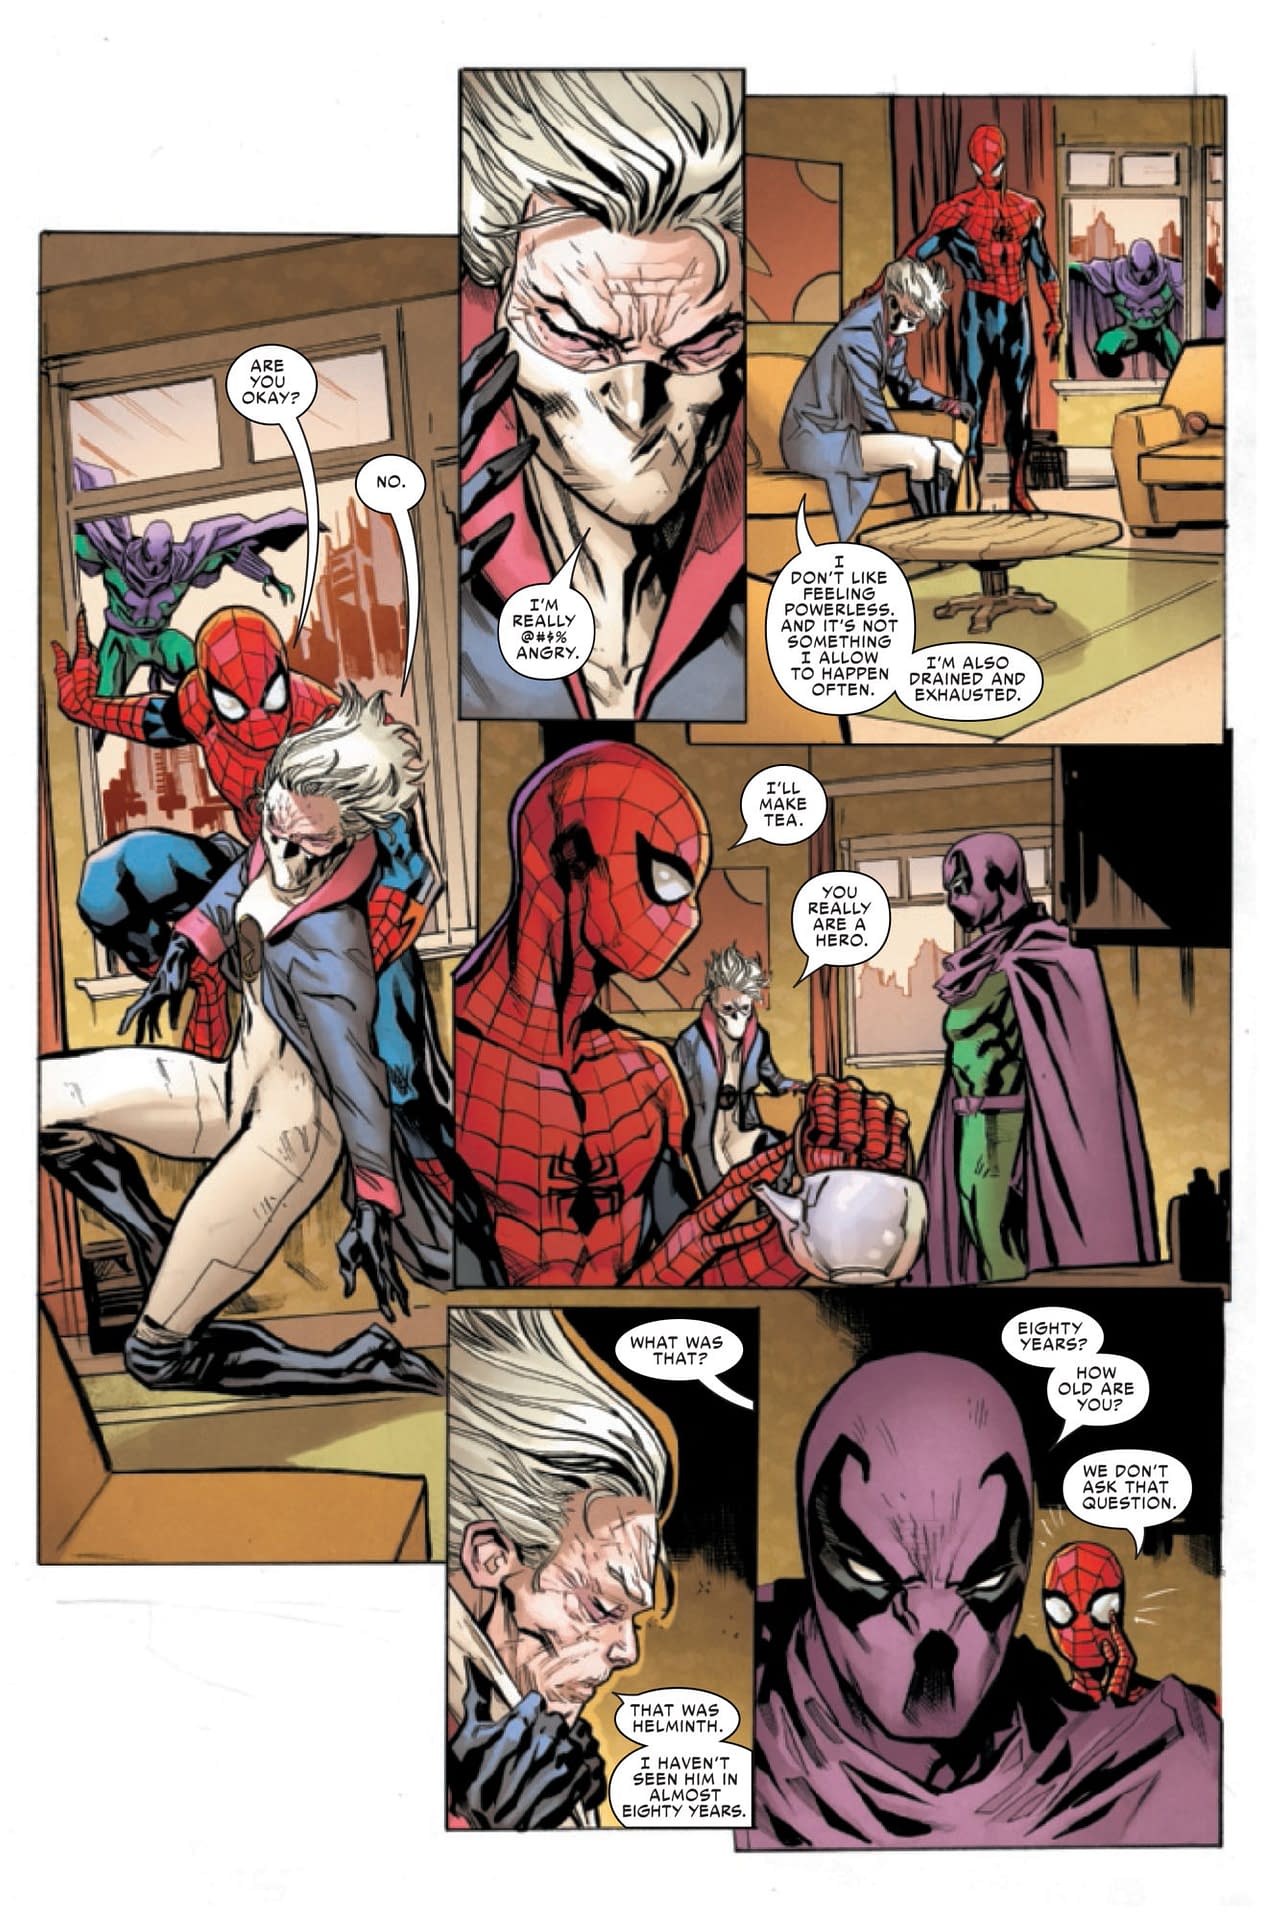 The Secret Origin of The Rumor in Friendly Neighborhood Spider-Man #9